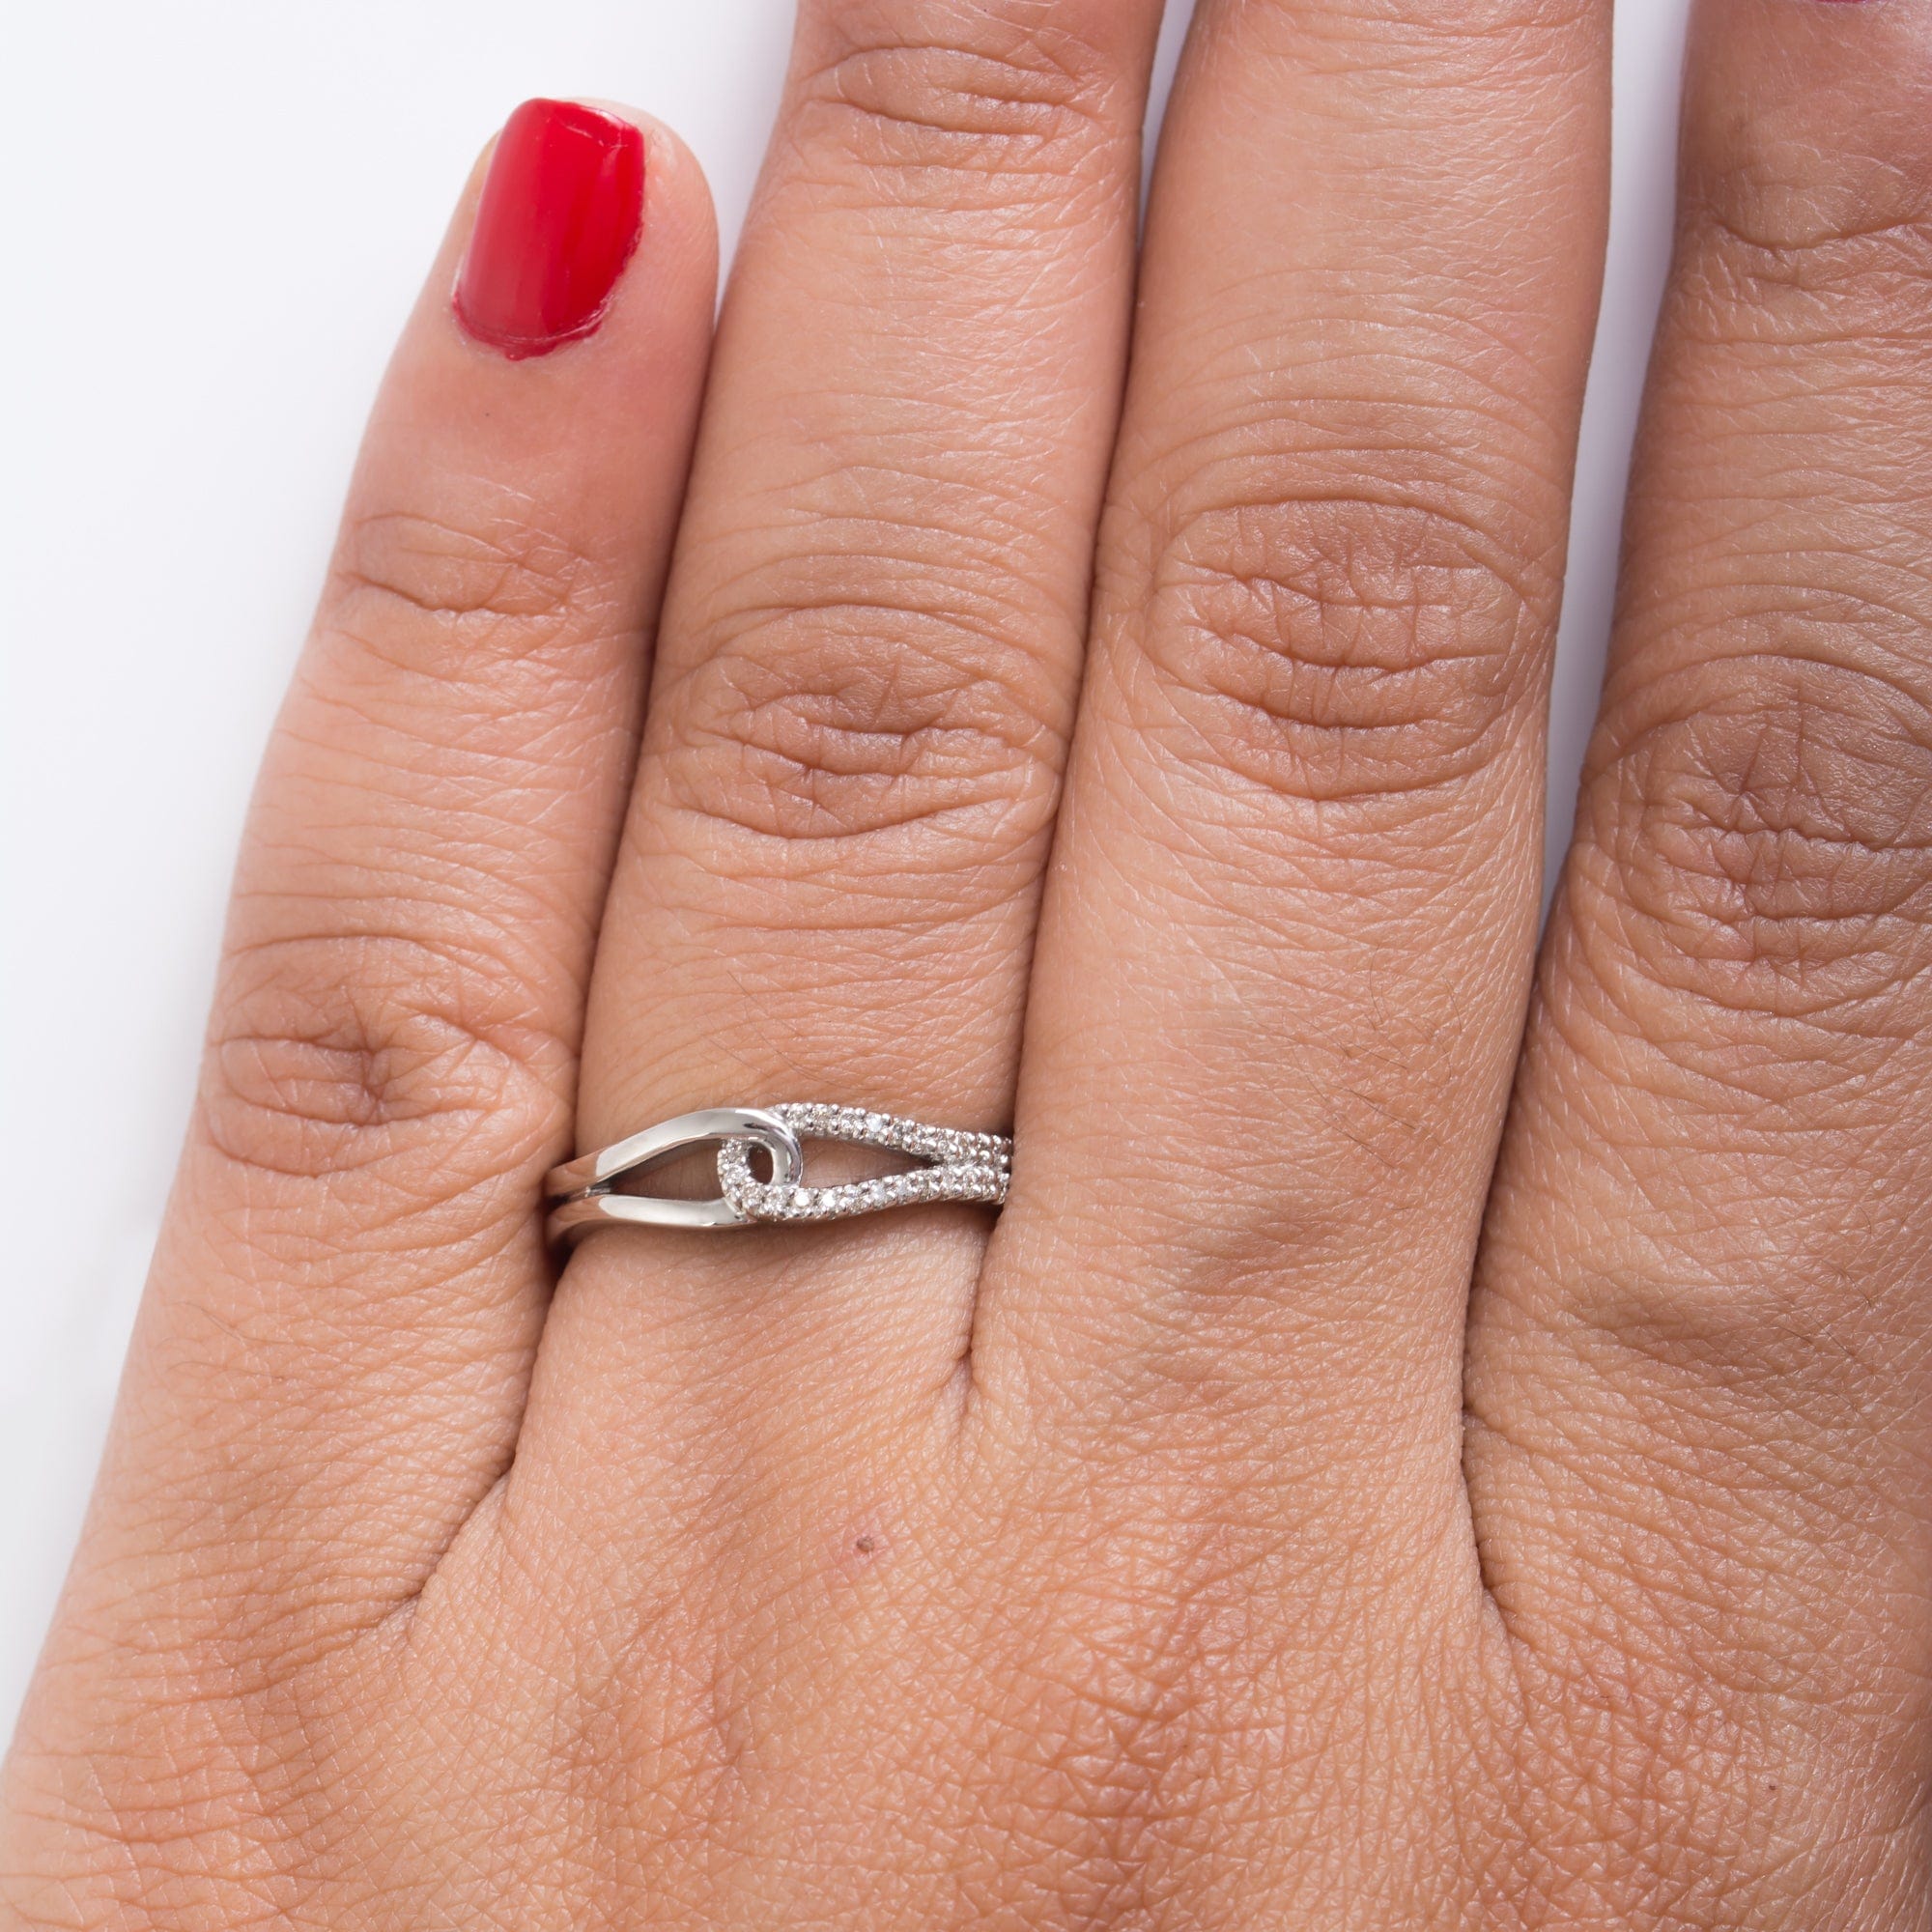 XSBODY CZ Adjustable One-finger Open Leaf Ring Women Hand Cuff AAAAA Cubic  Zirconia Bride Wedding Rings Aesthetic Party Gifts - AliExpress